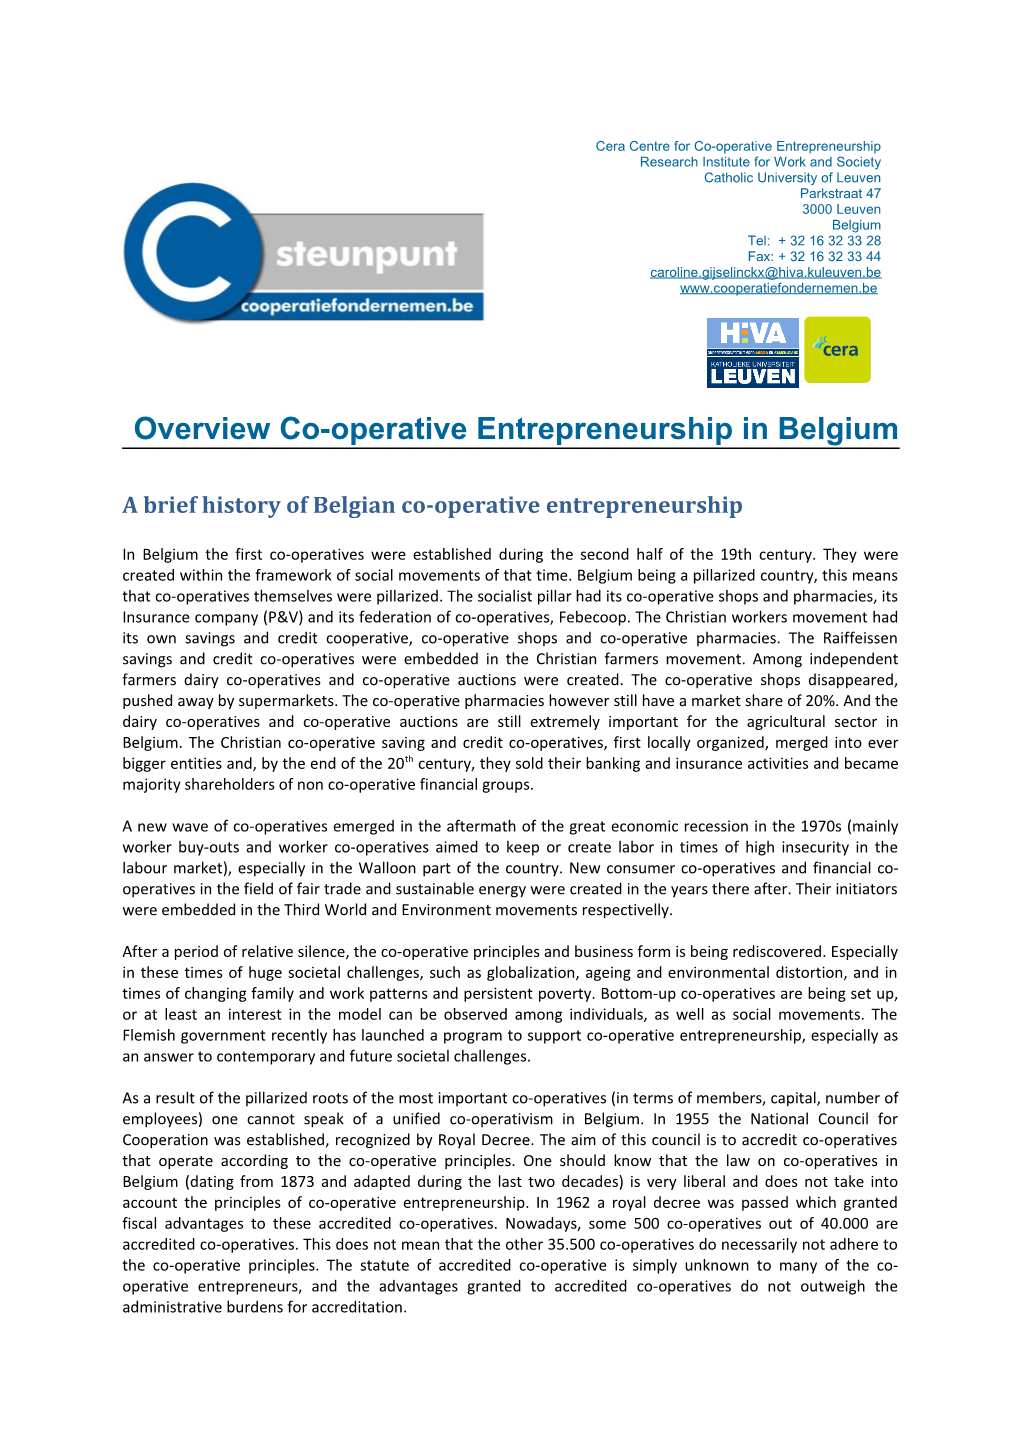 Overview Co-Operative Entrepreneurship in Belgium